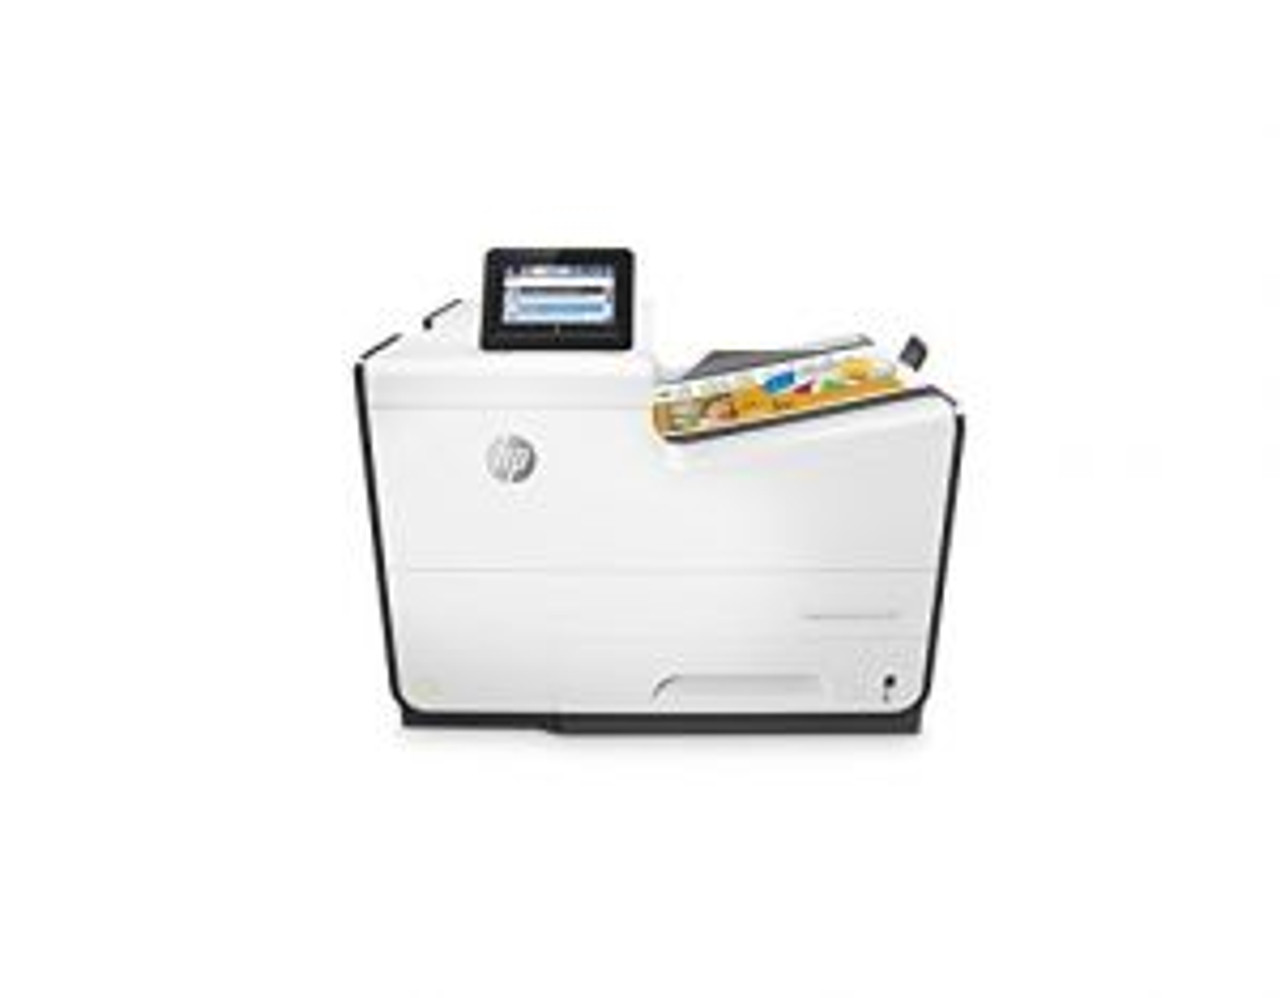 Printers & Cartridges,Printer,HP,G1W46A